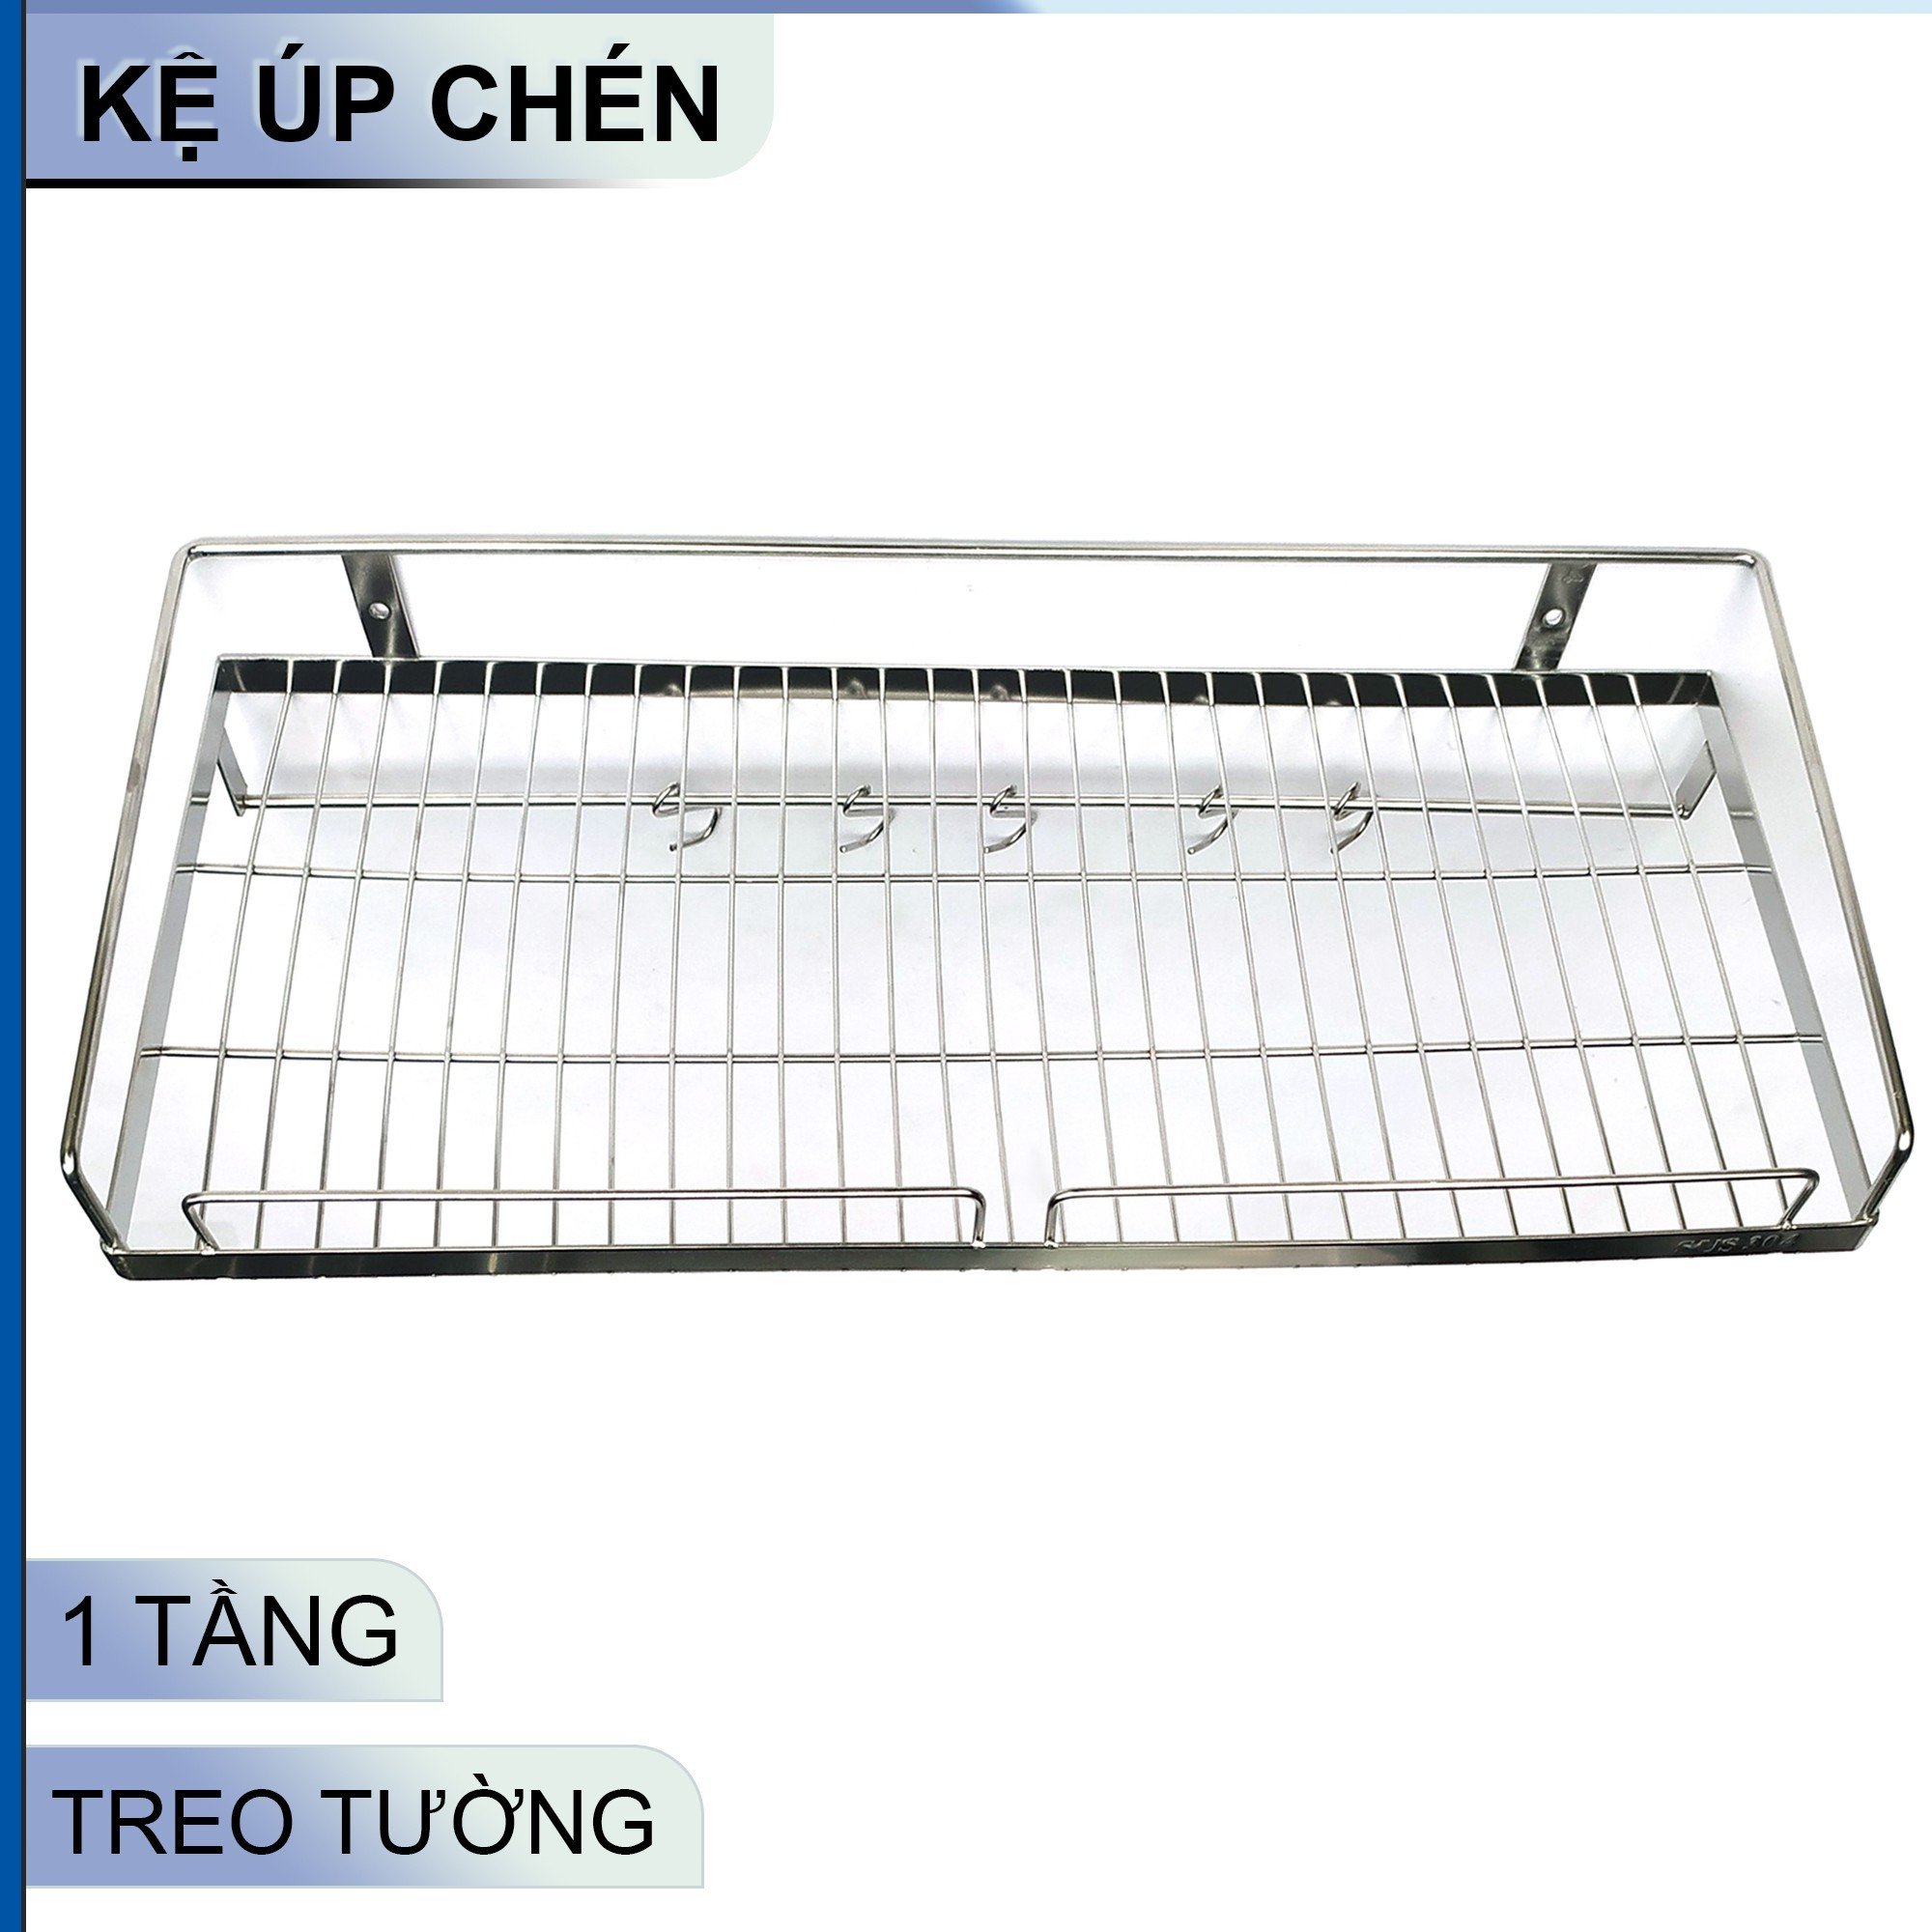 ke-up-chen-1-tang-inox-ki-cd01-vattugiagoc.com